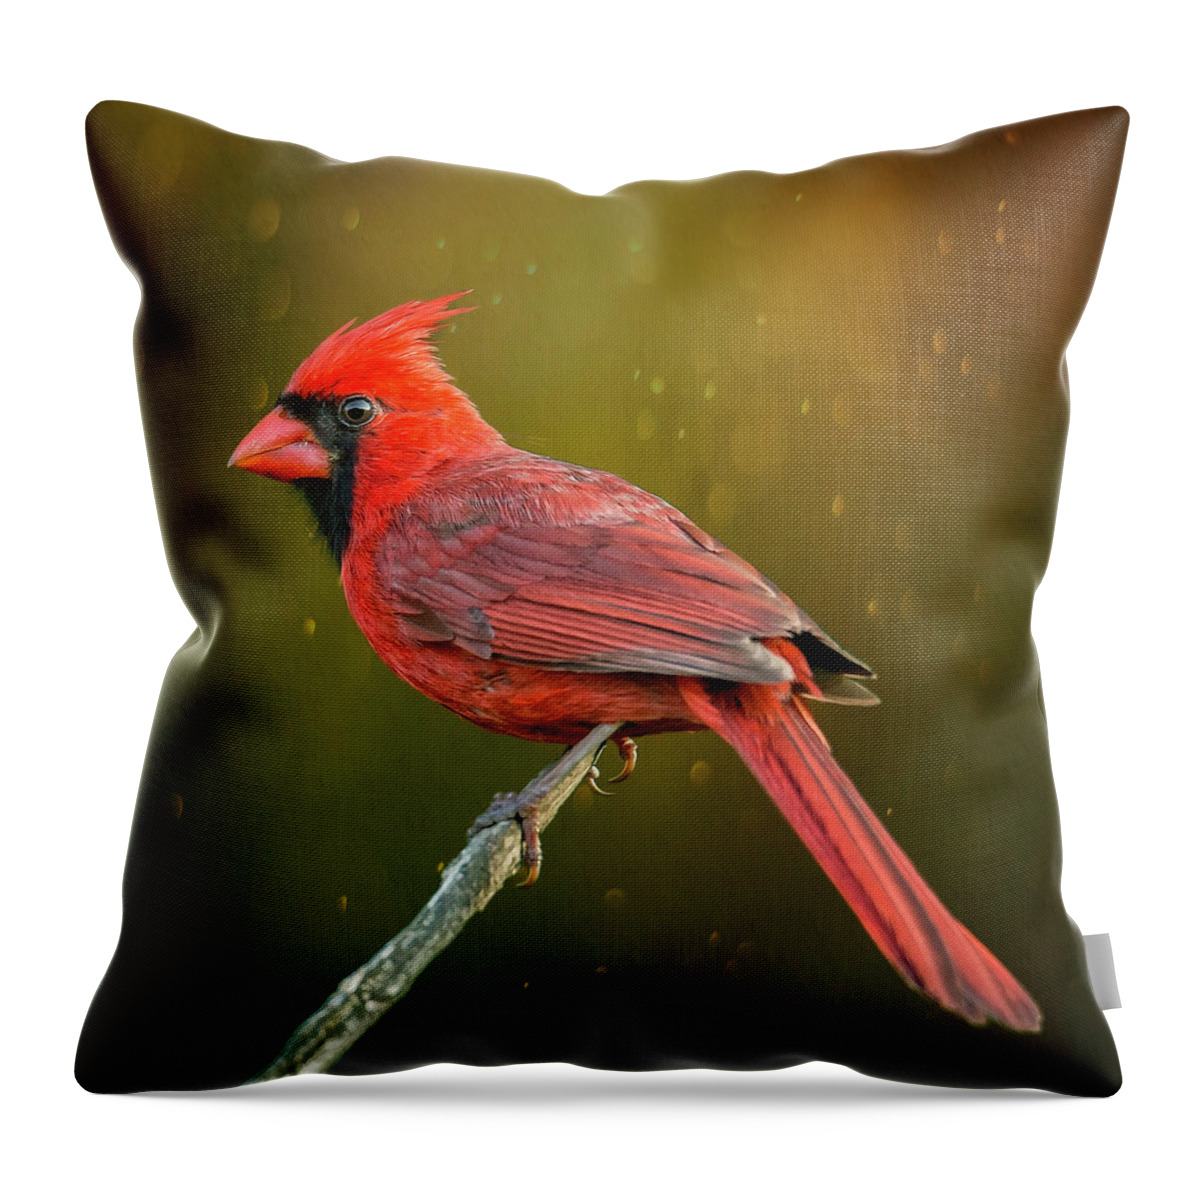 Northern Cardinal Throw Pillow featuring the photograph Redbird On A Stick by Bill and Linda Tiepelman